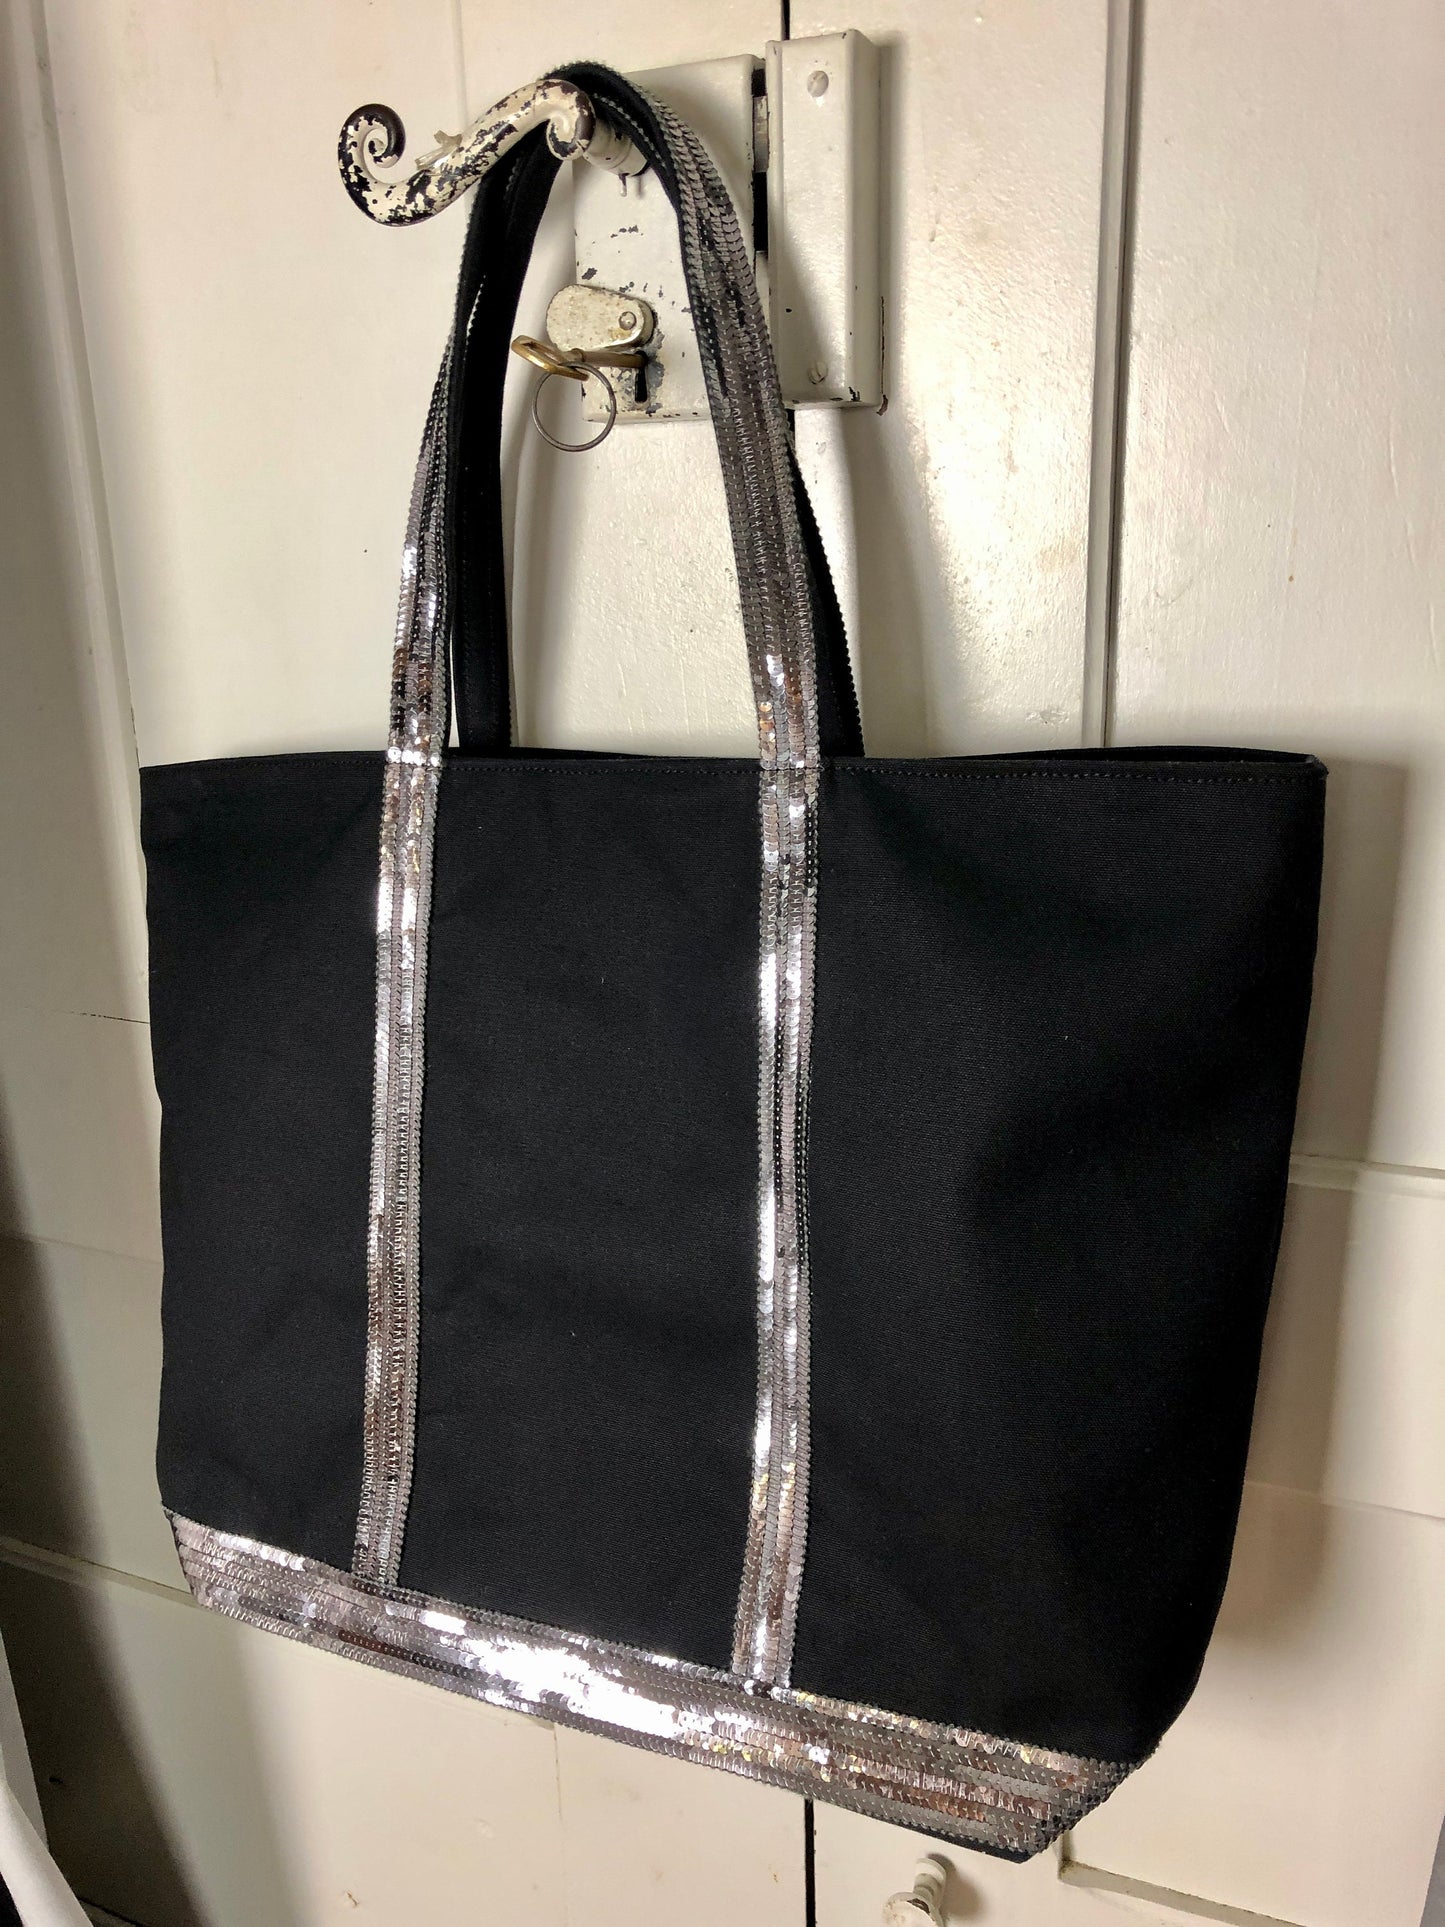 Black glitter tote bag - black cotton canvas bag topped with sequins - black tote bag